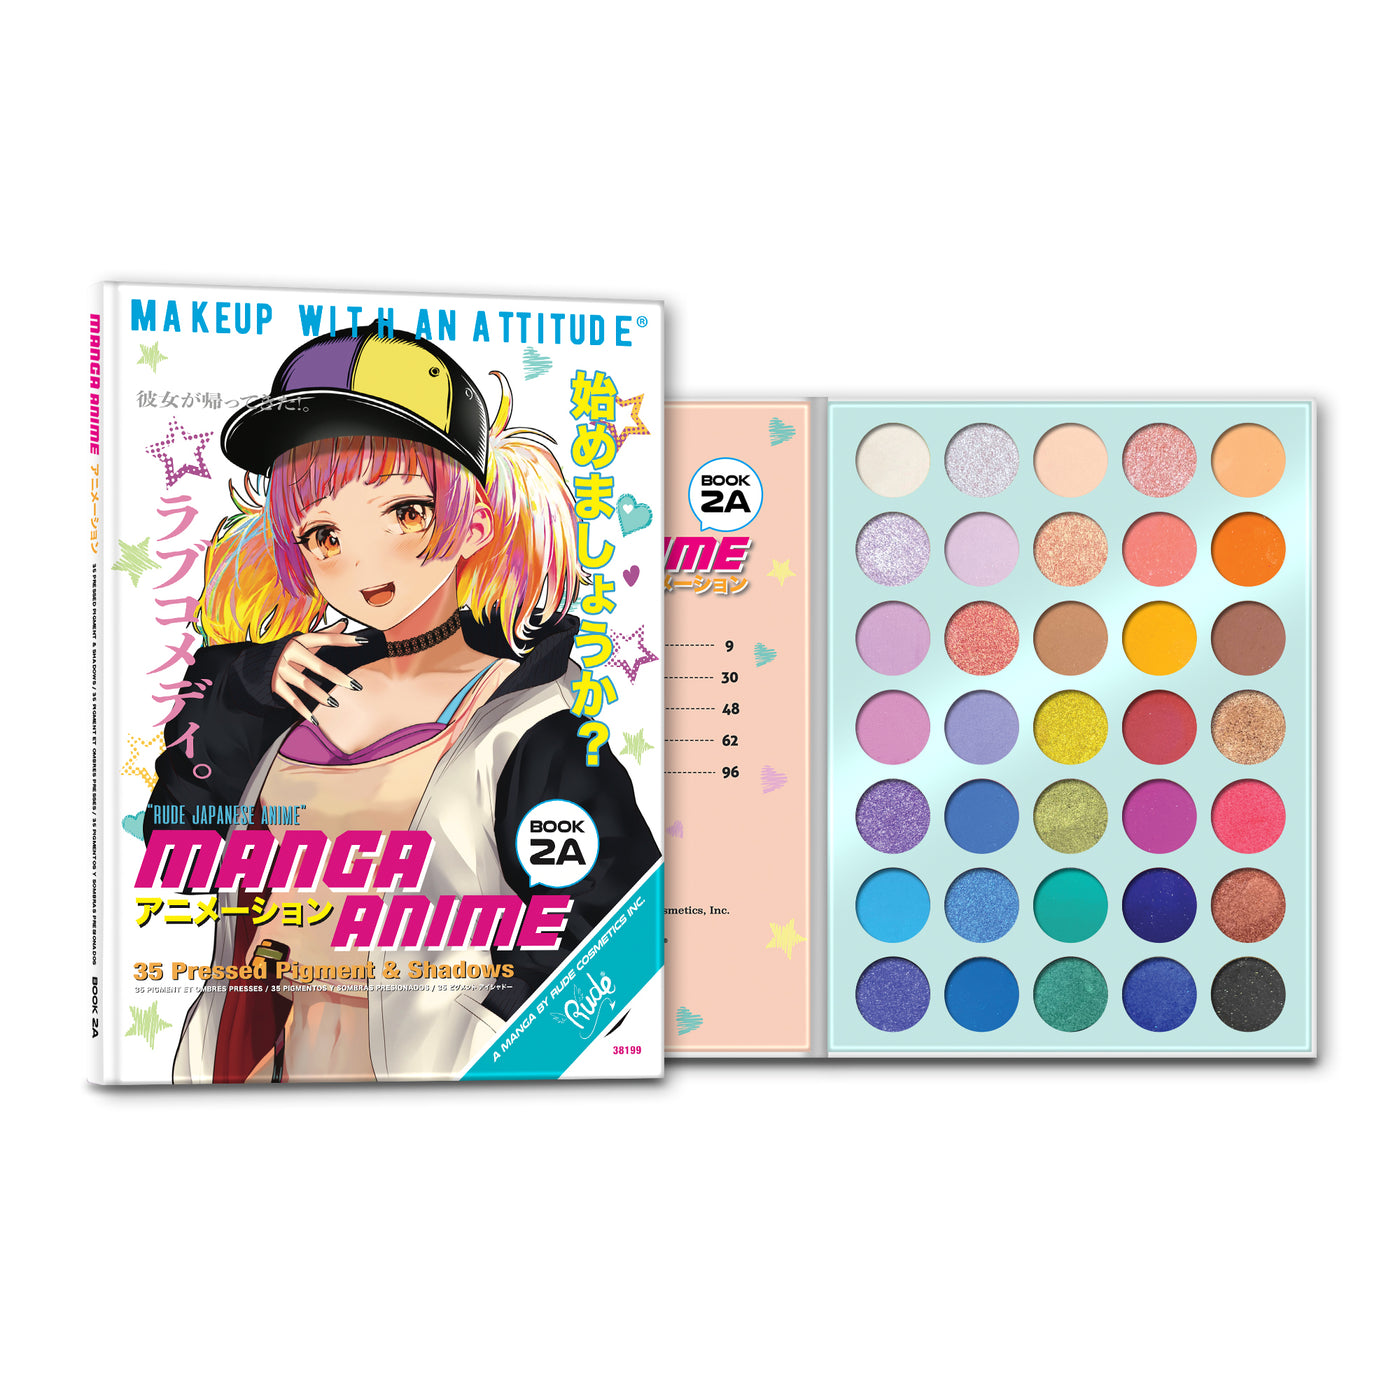 Manga Anime 35 Eyeshadows Palette Book 2 By Rude Brand | eBay